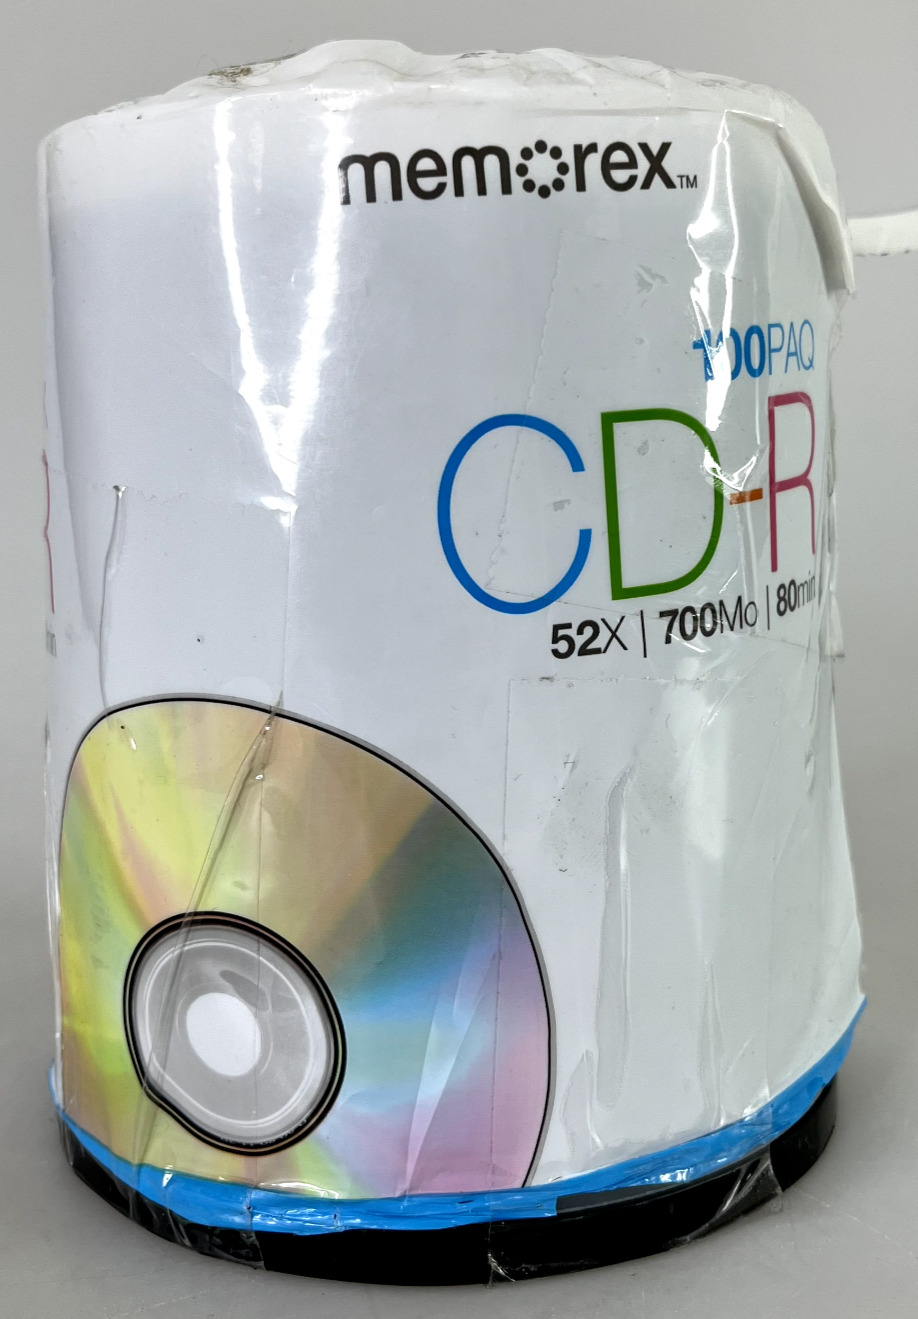 New Sealed Spindle Box MEMOREX Digital 100 PAQ CD-R 52X 700Mo 80min Discs